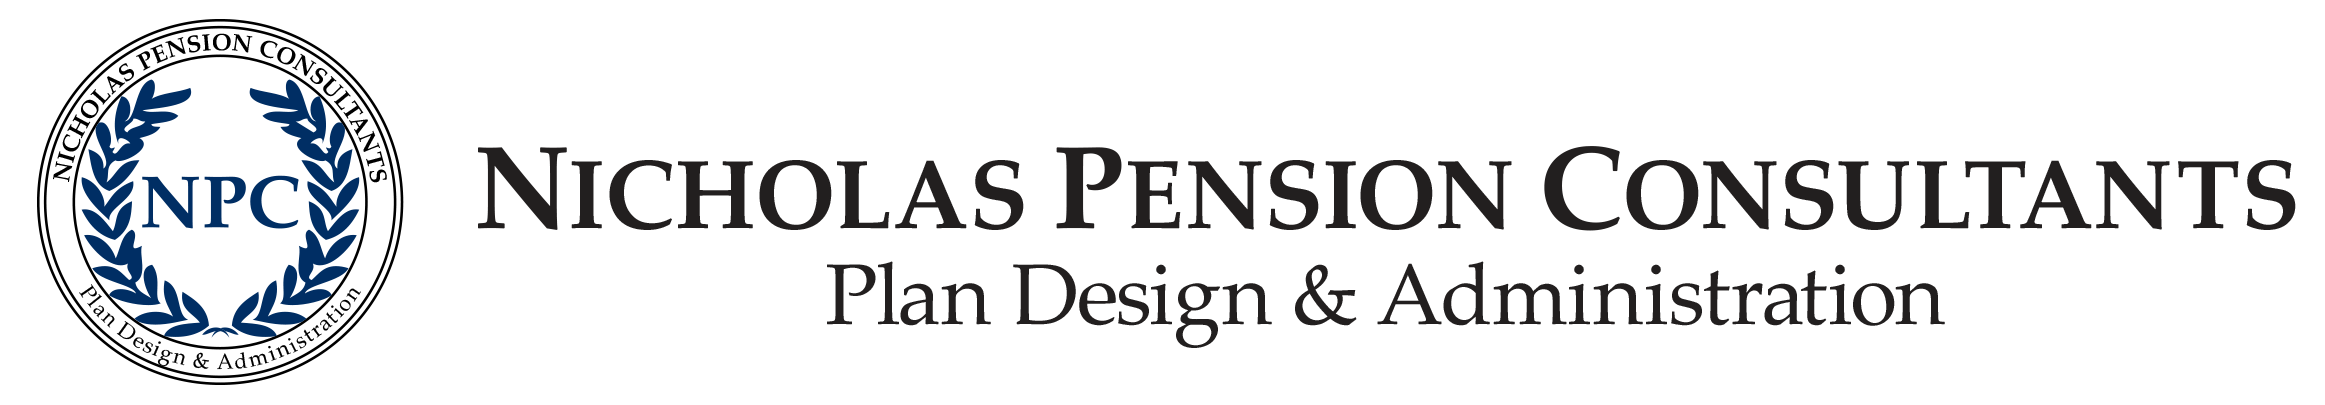 Nicholas Pension Consultants